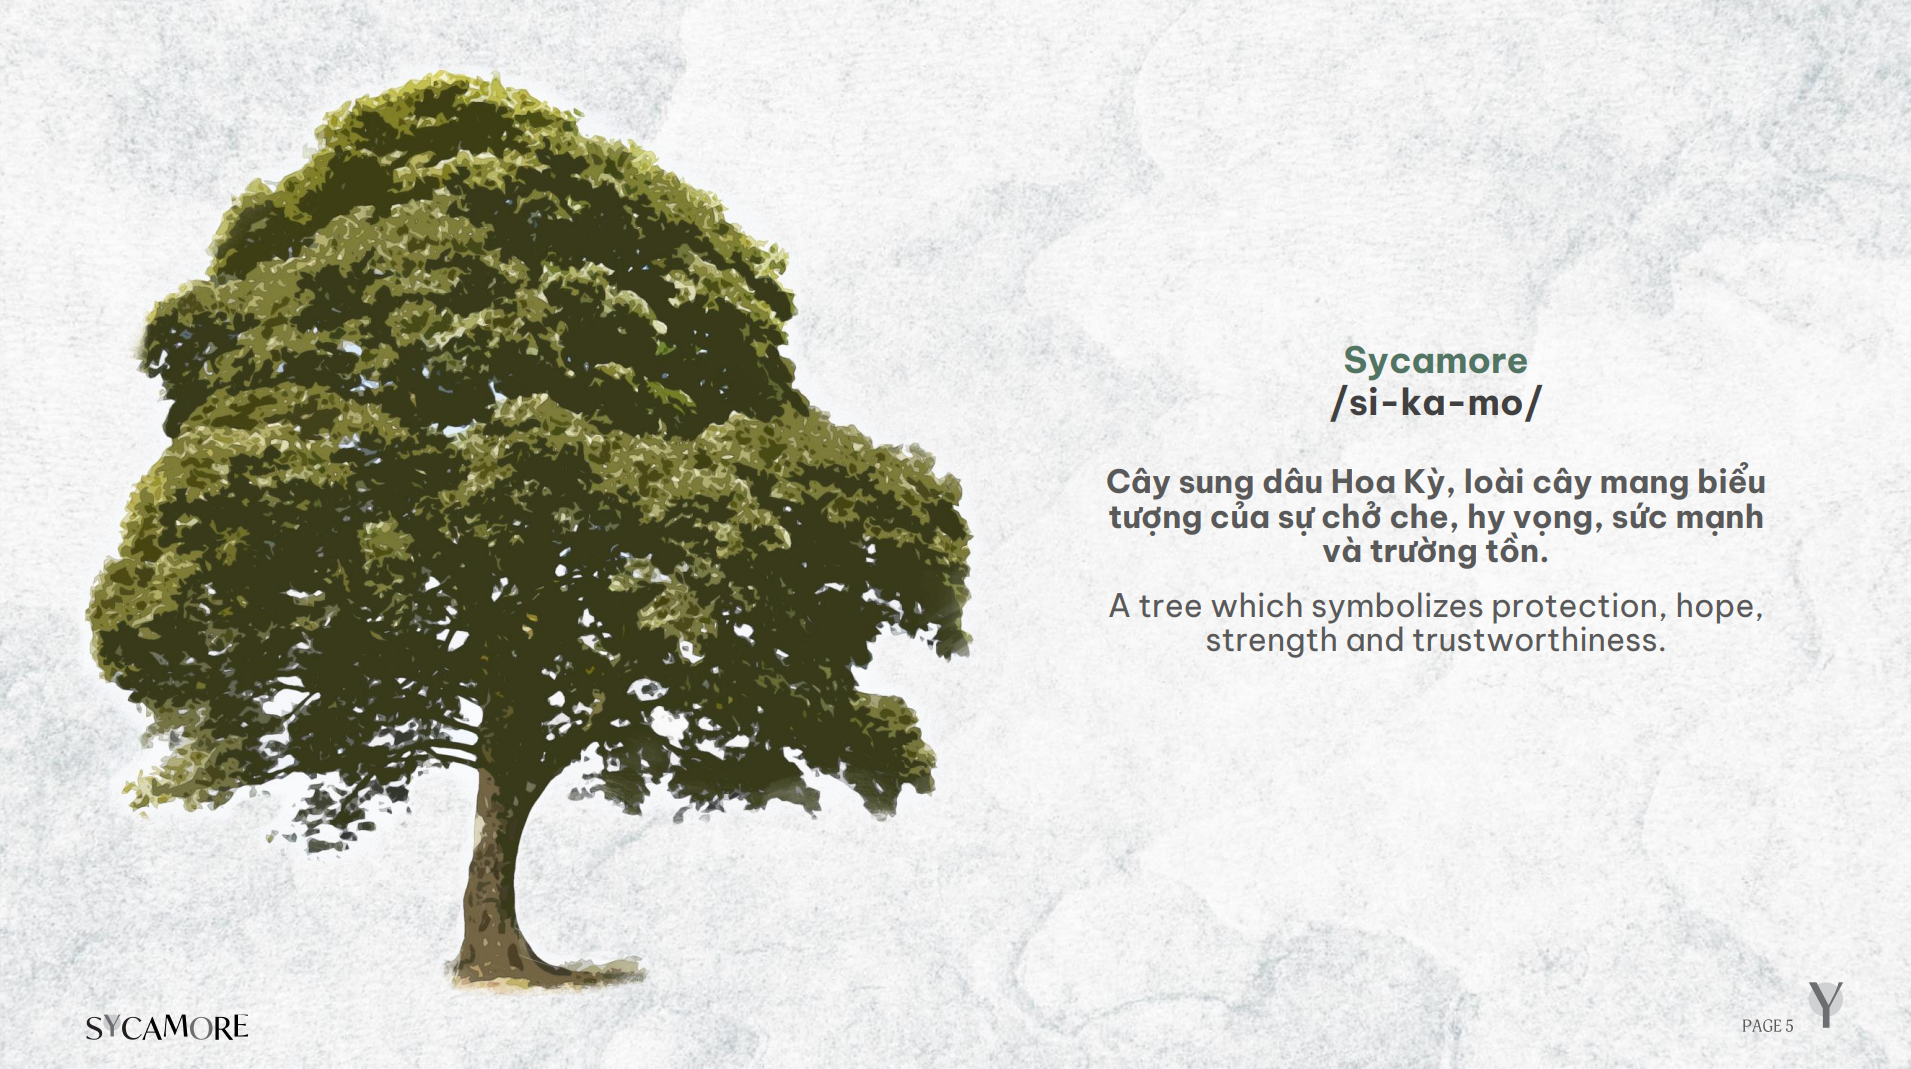 Sycamore (cây sung dâu Hoa Kỳ)